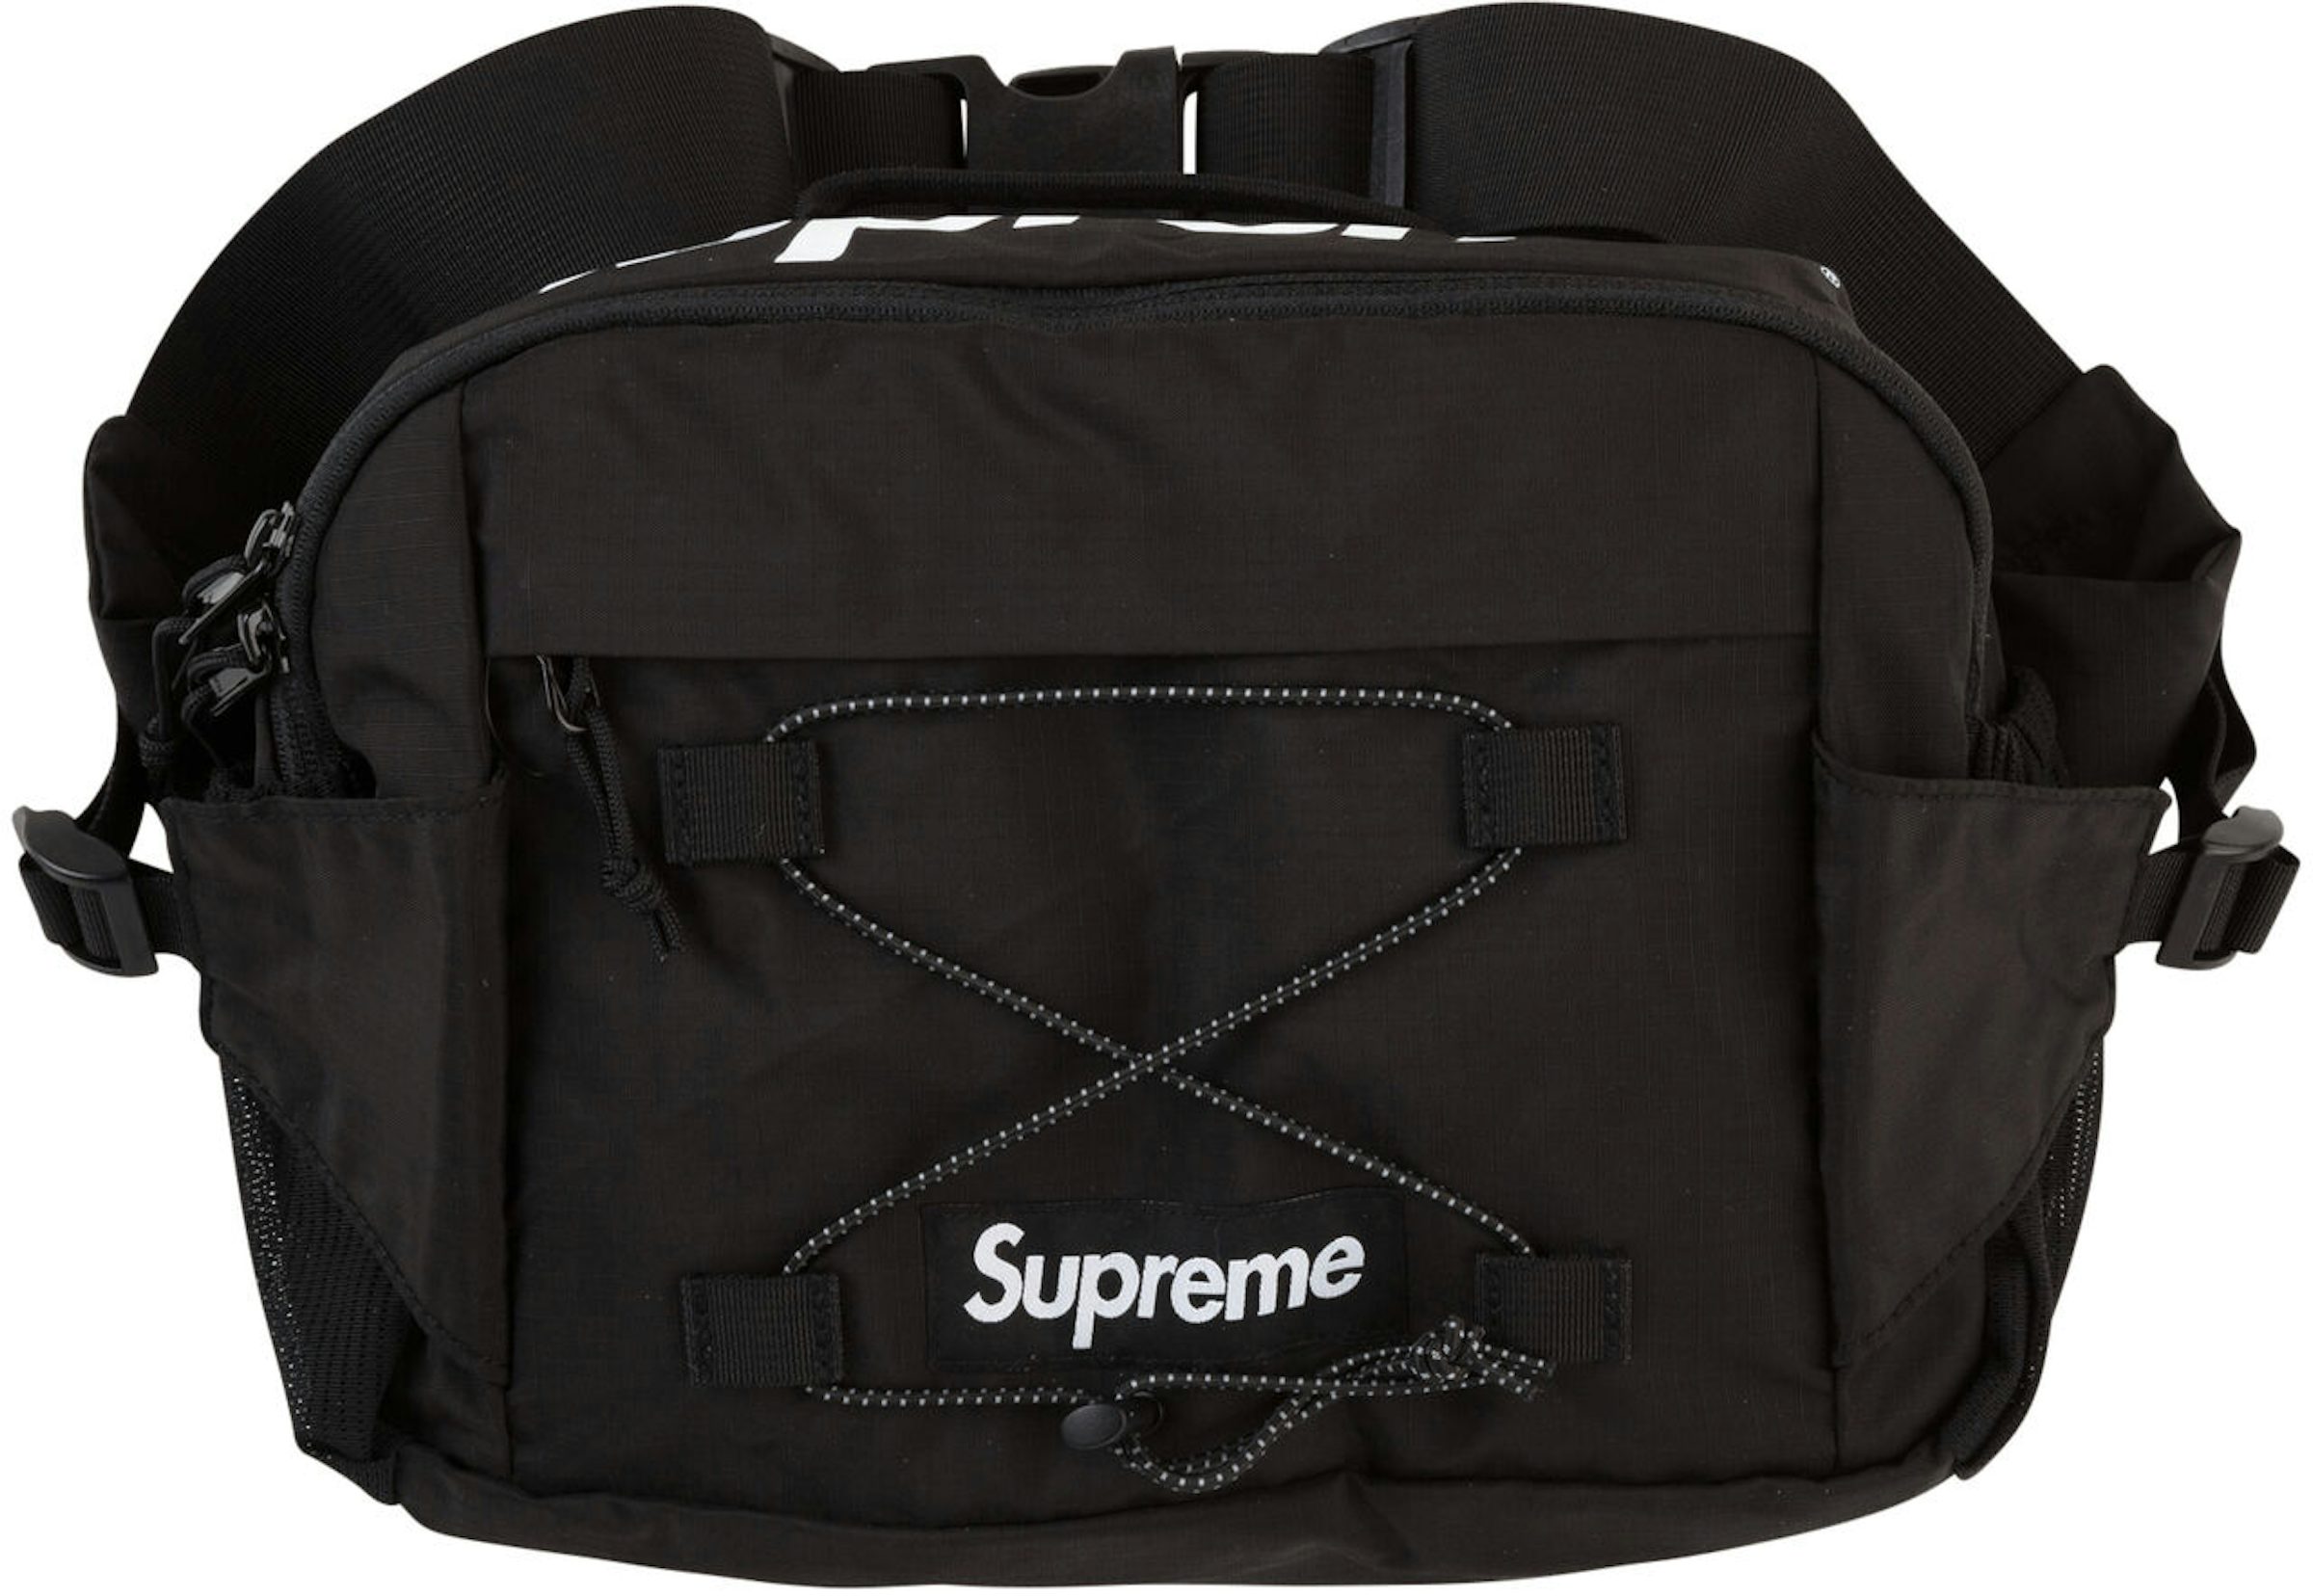 Supreme Duffle Bag SS 19 - Stadium Goods